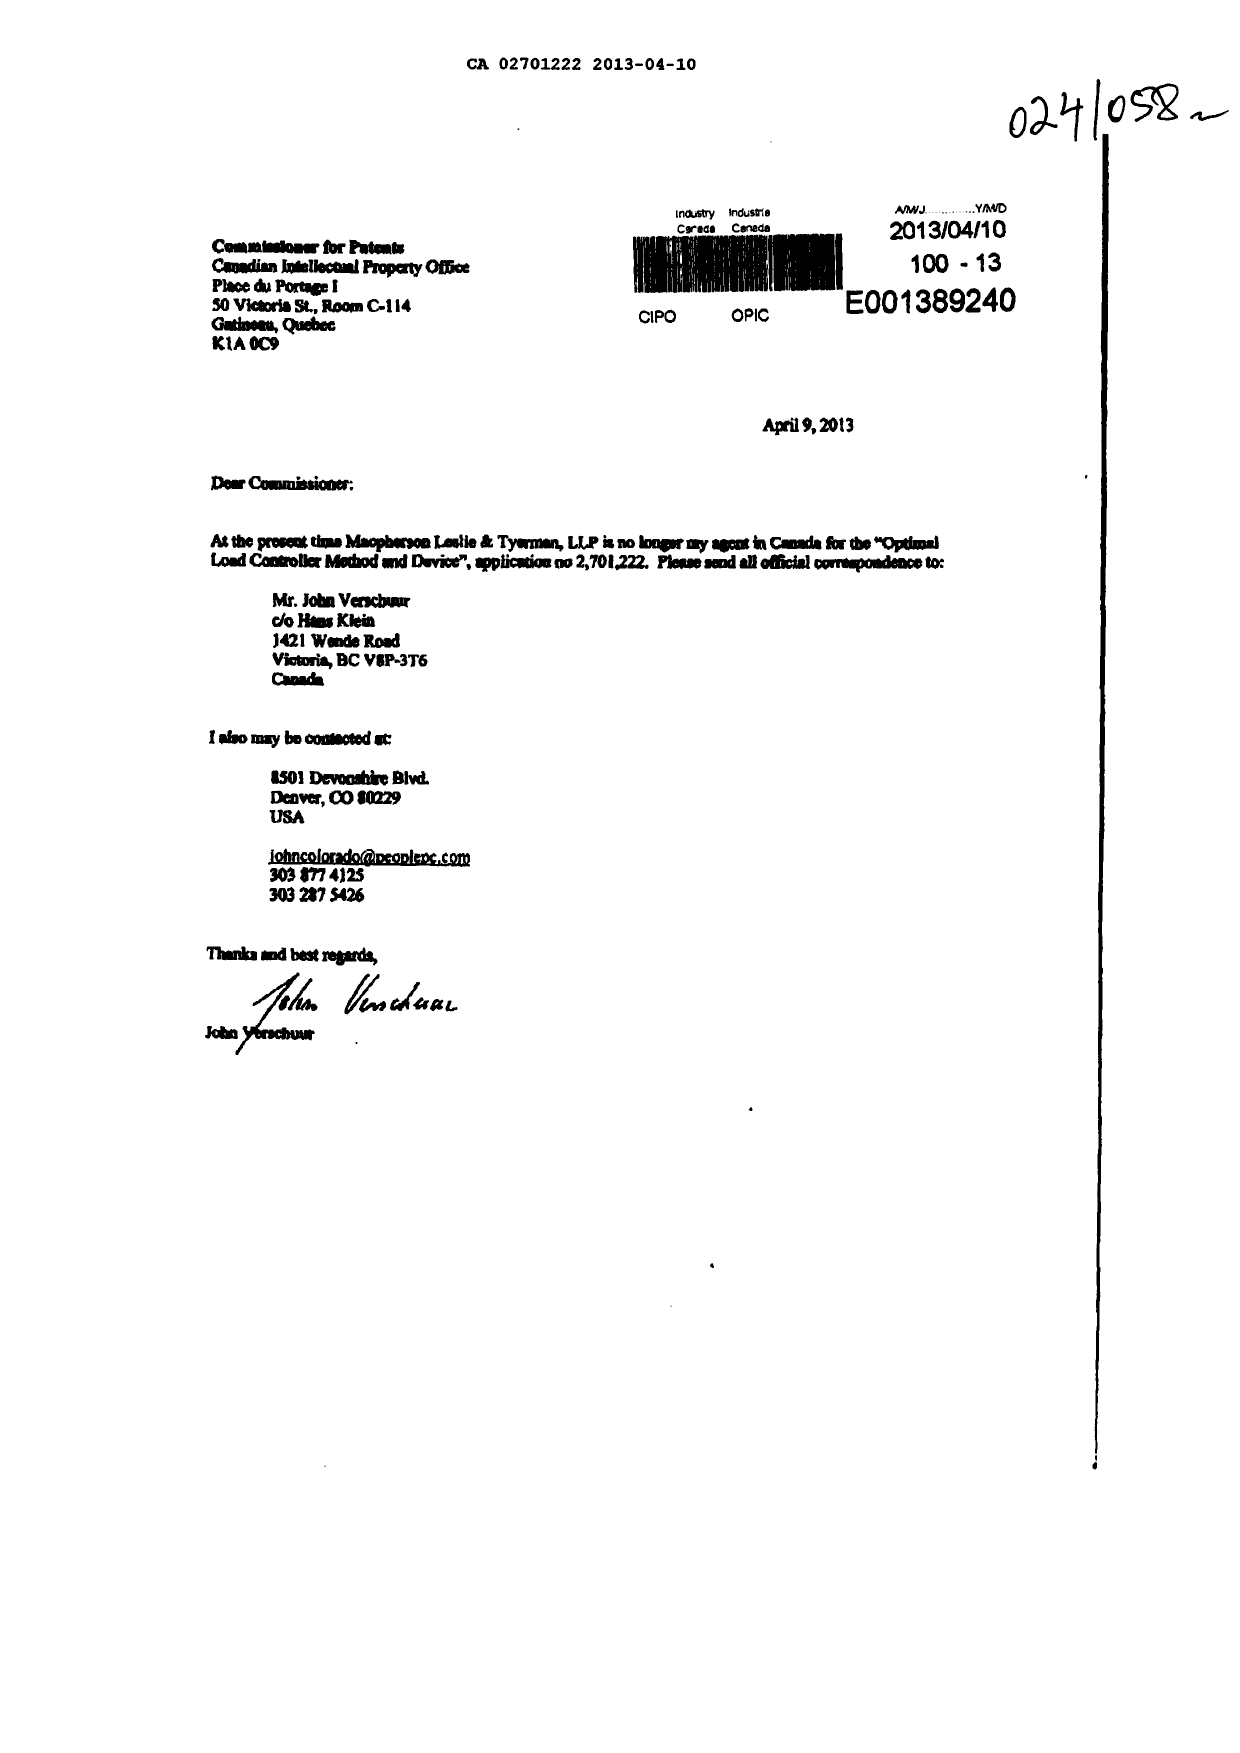 Canadian Patent Document 2701222. Correspondence 20121210. Image 1 of 1